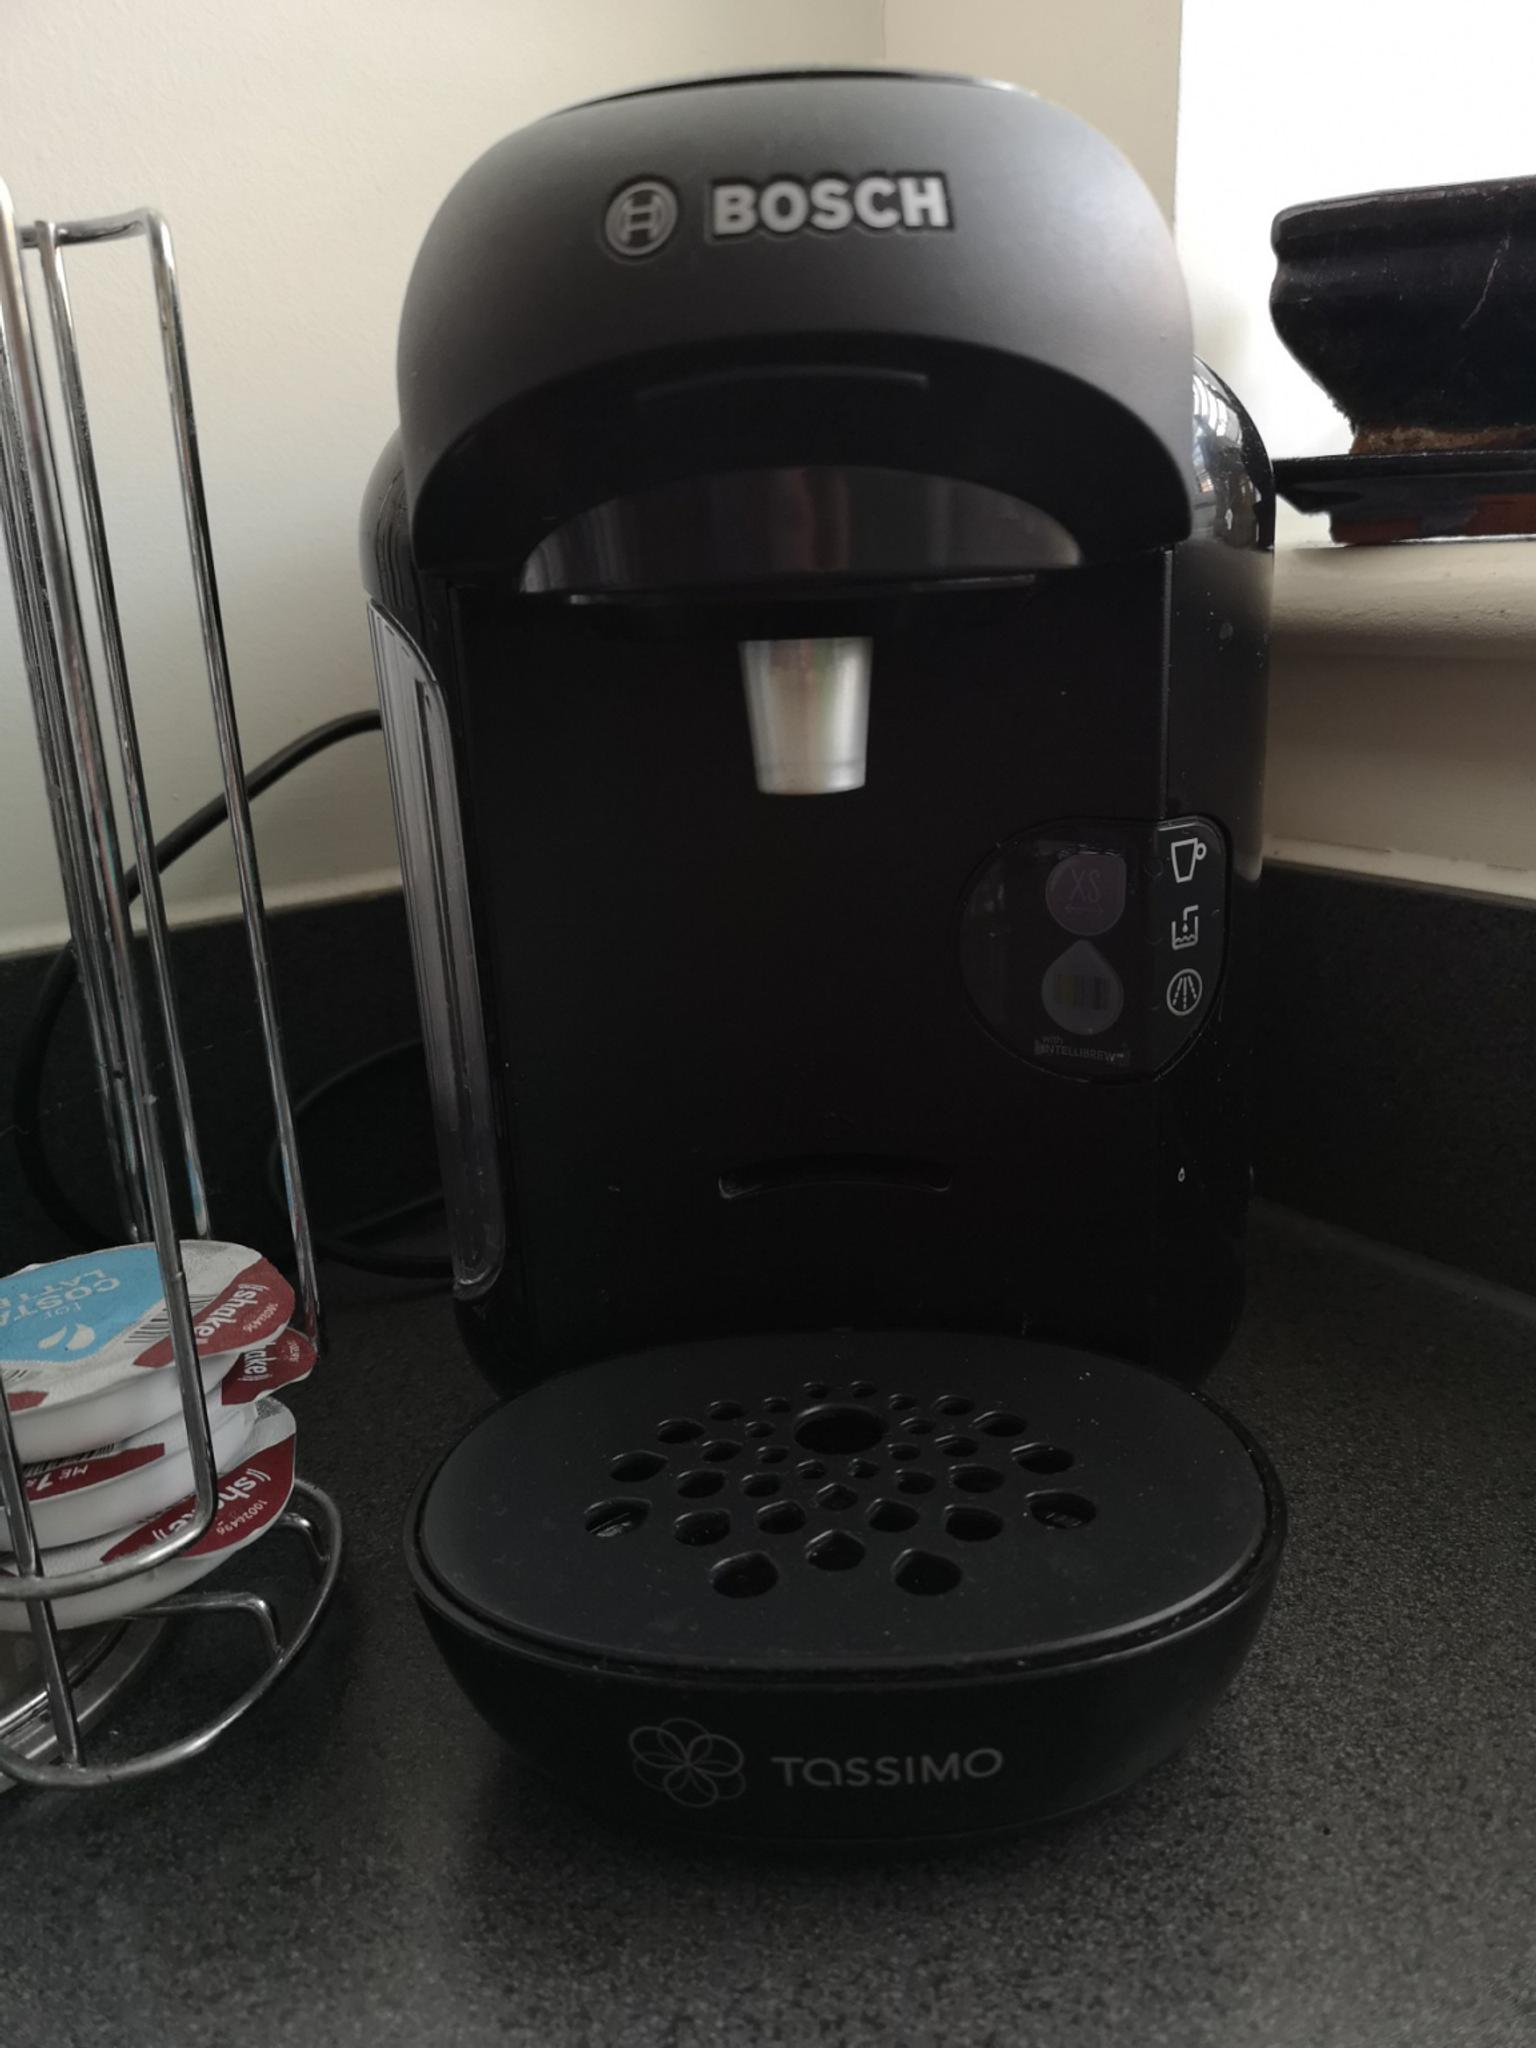 Bosch Tassimo Coffee Machine Refills Stand In Lu4 Luton For